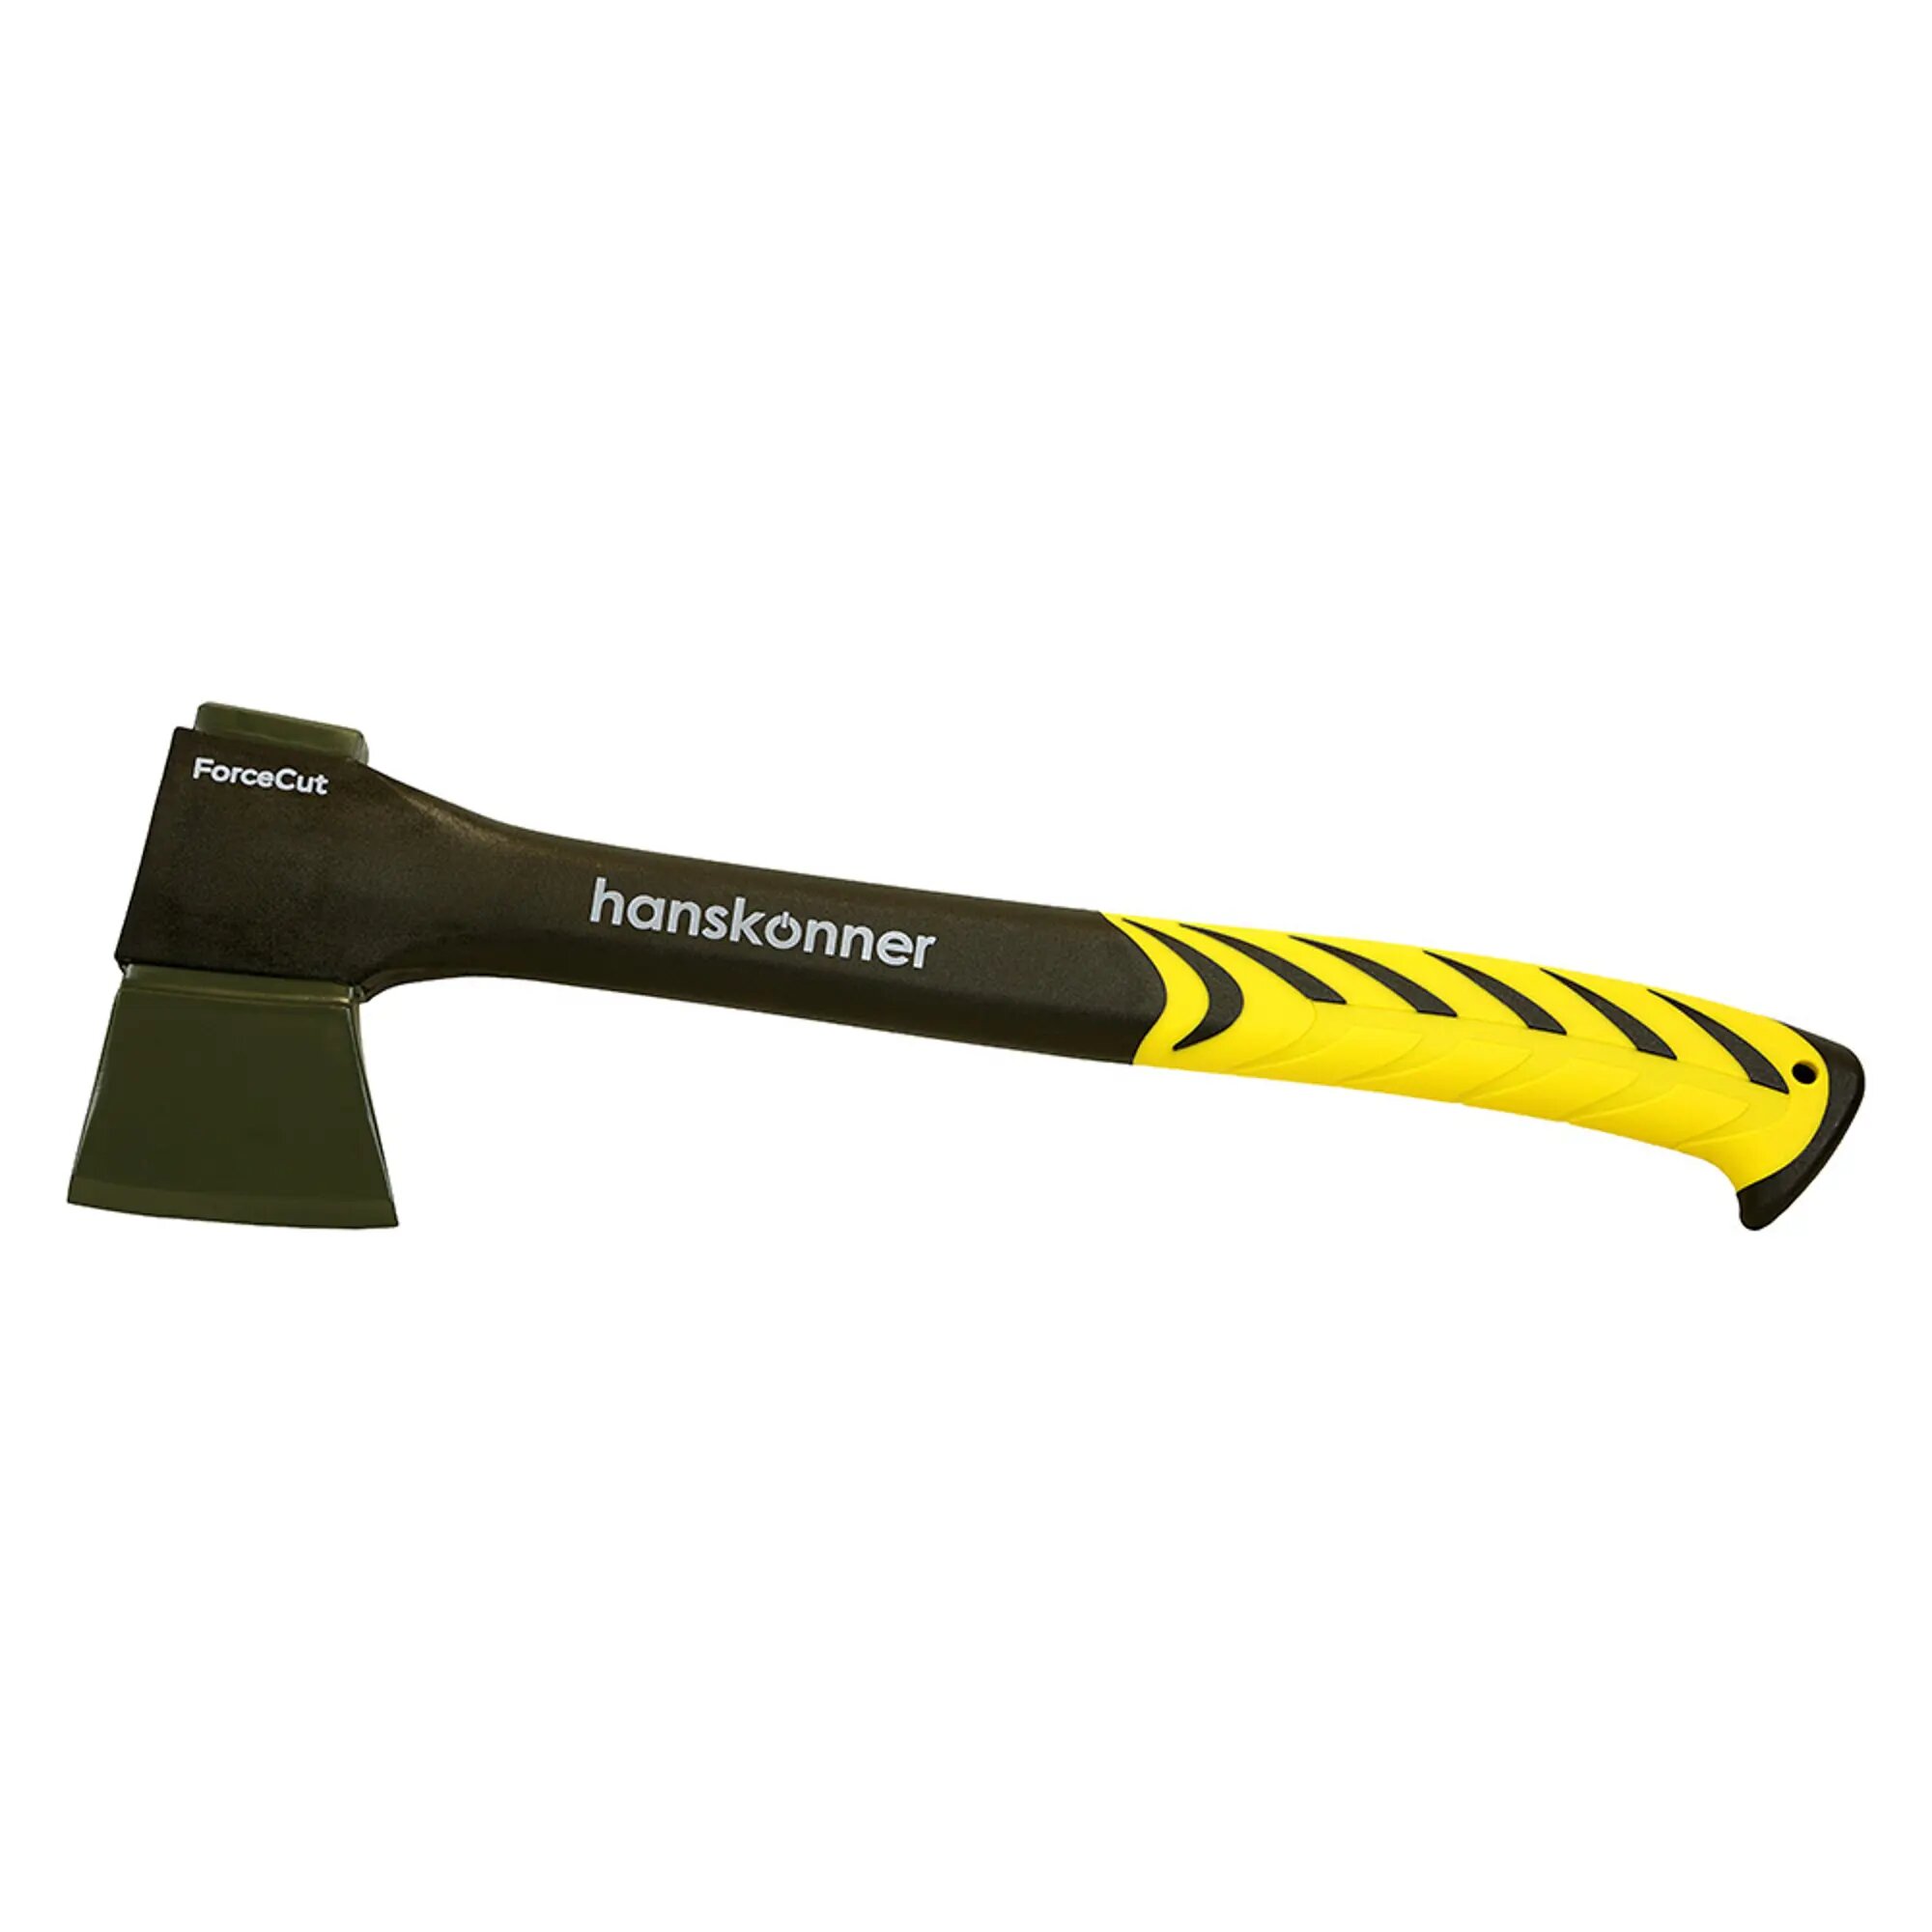 Топор Hanskonner HK1015-01-FB0650 фиберглассовая ручка 520 мм 1000 г - фото №14